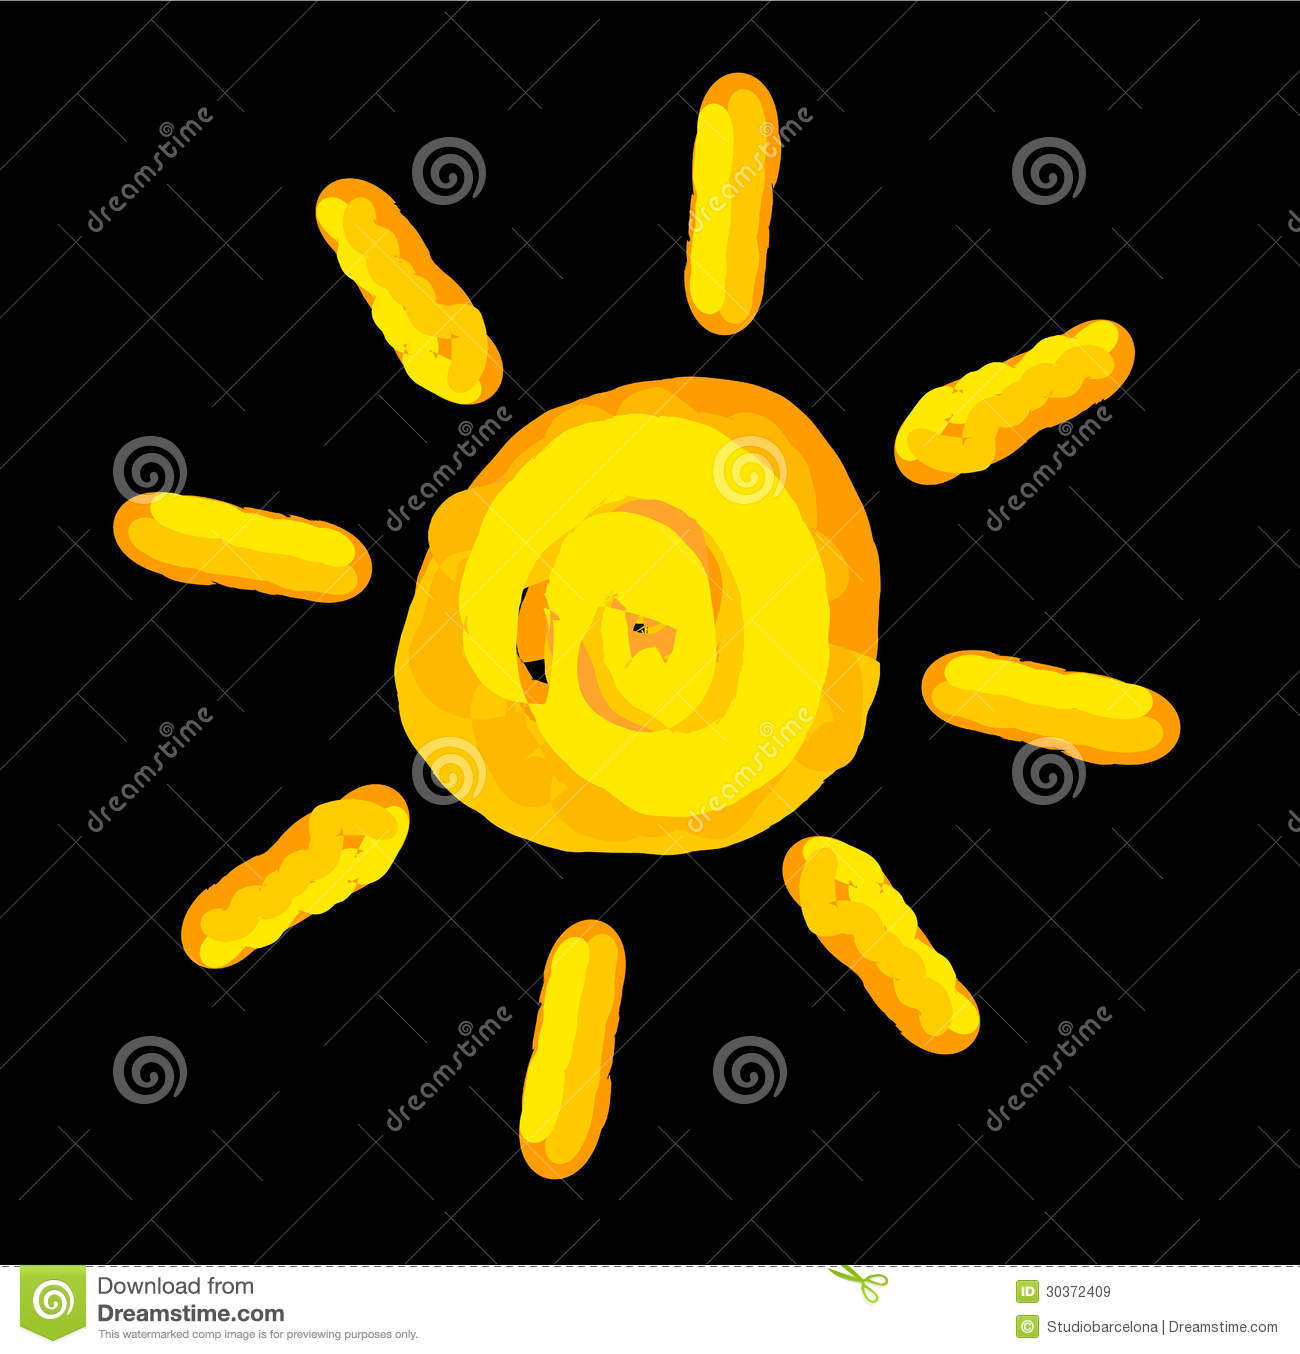 Cartoon Sun with Black Background